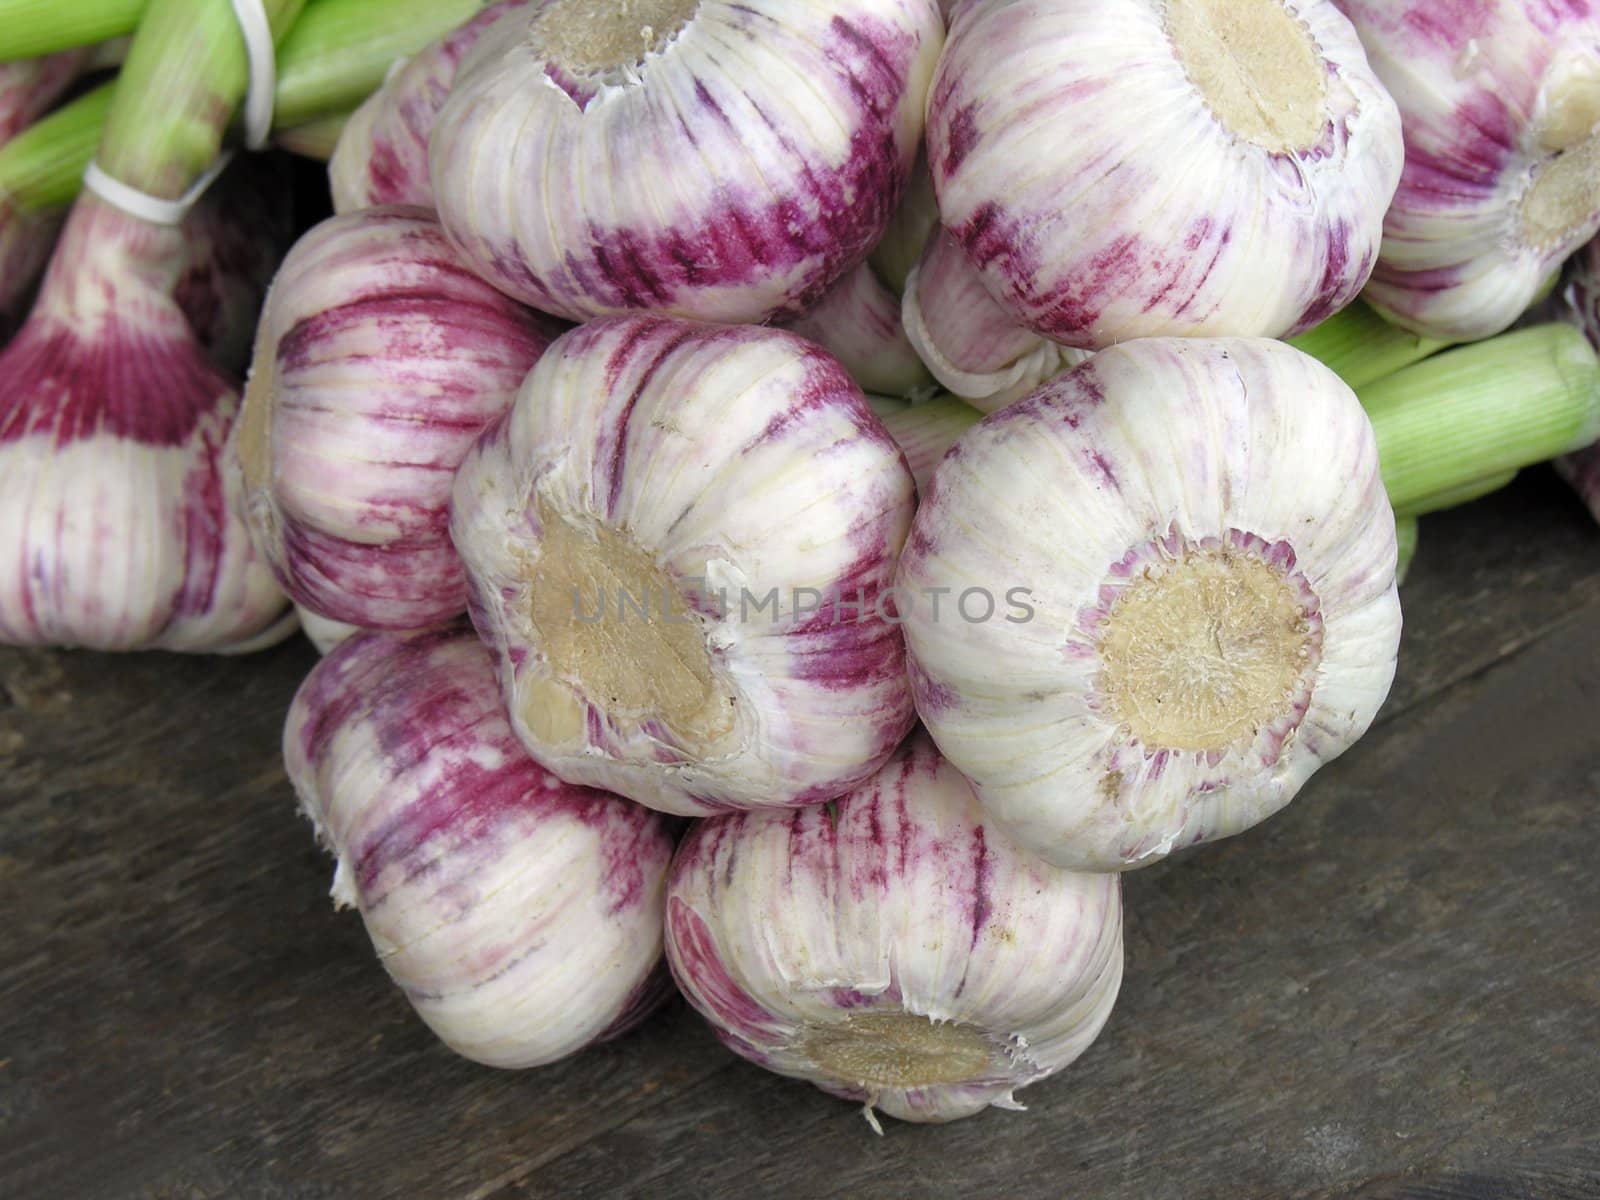 garlic in may by RAIMA